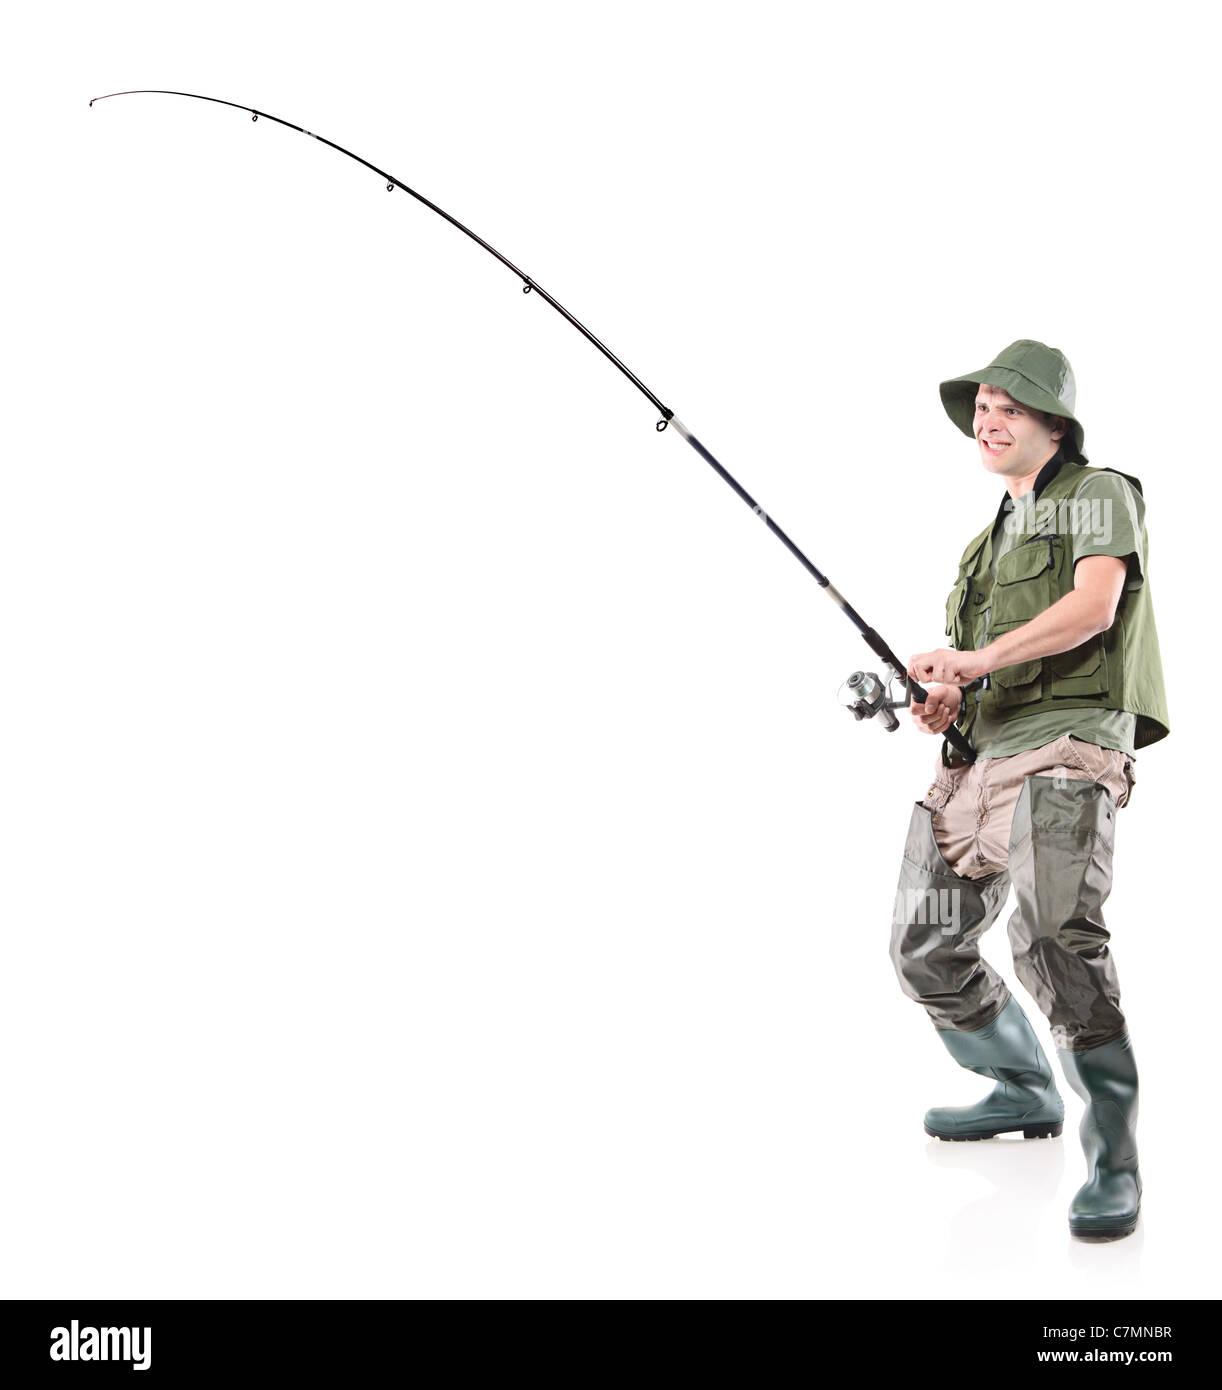 https://c8.alamy.com/comp/C7MNBR/full-length-portrait-of-a-fisherman-holding-a-fishing-pole-C7MNBR.jpg